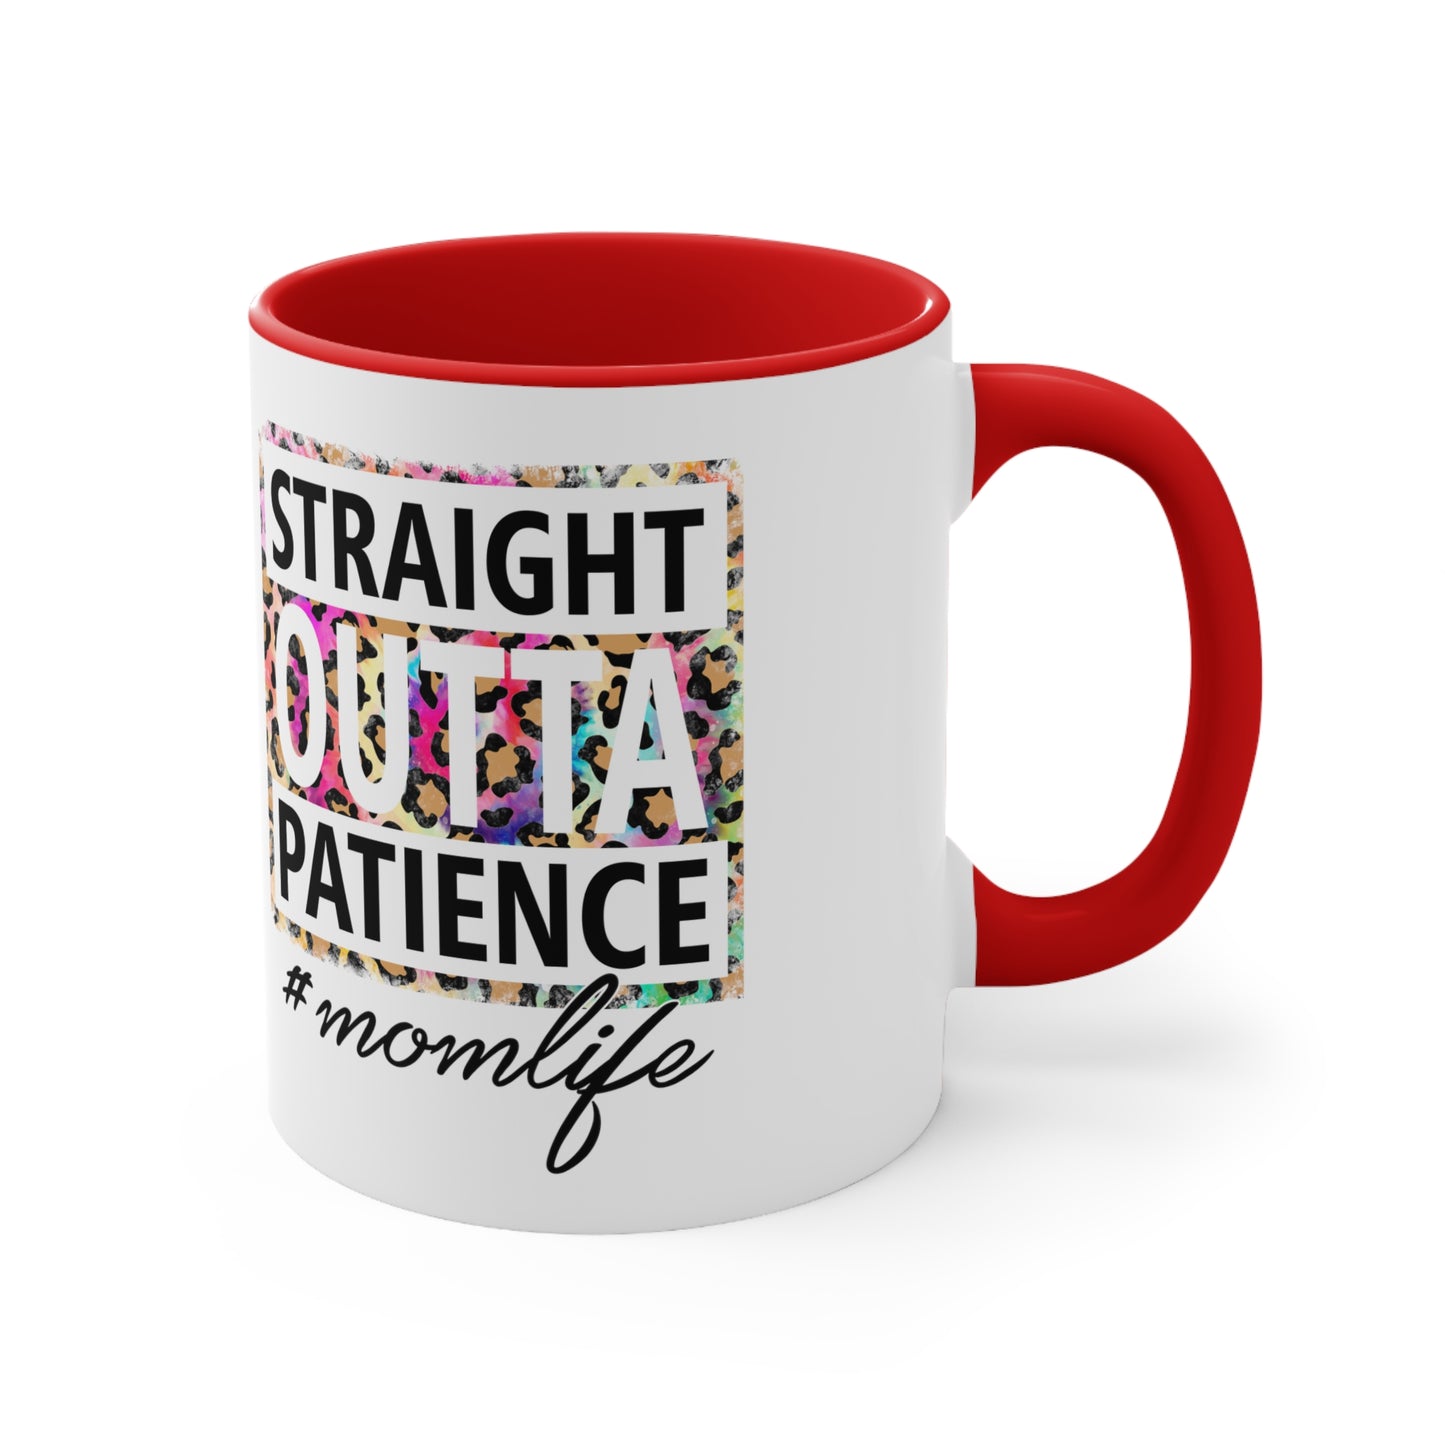 Straight outta patience Tonic Tea Mug